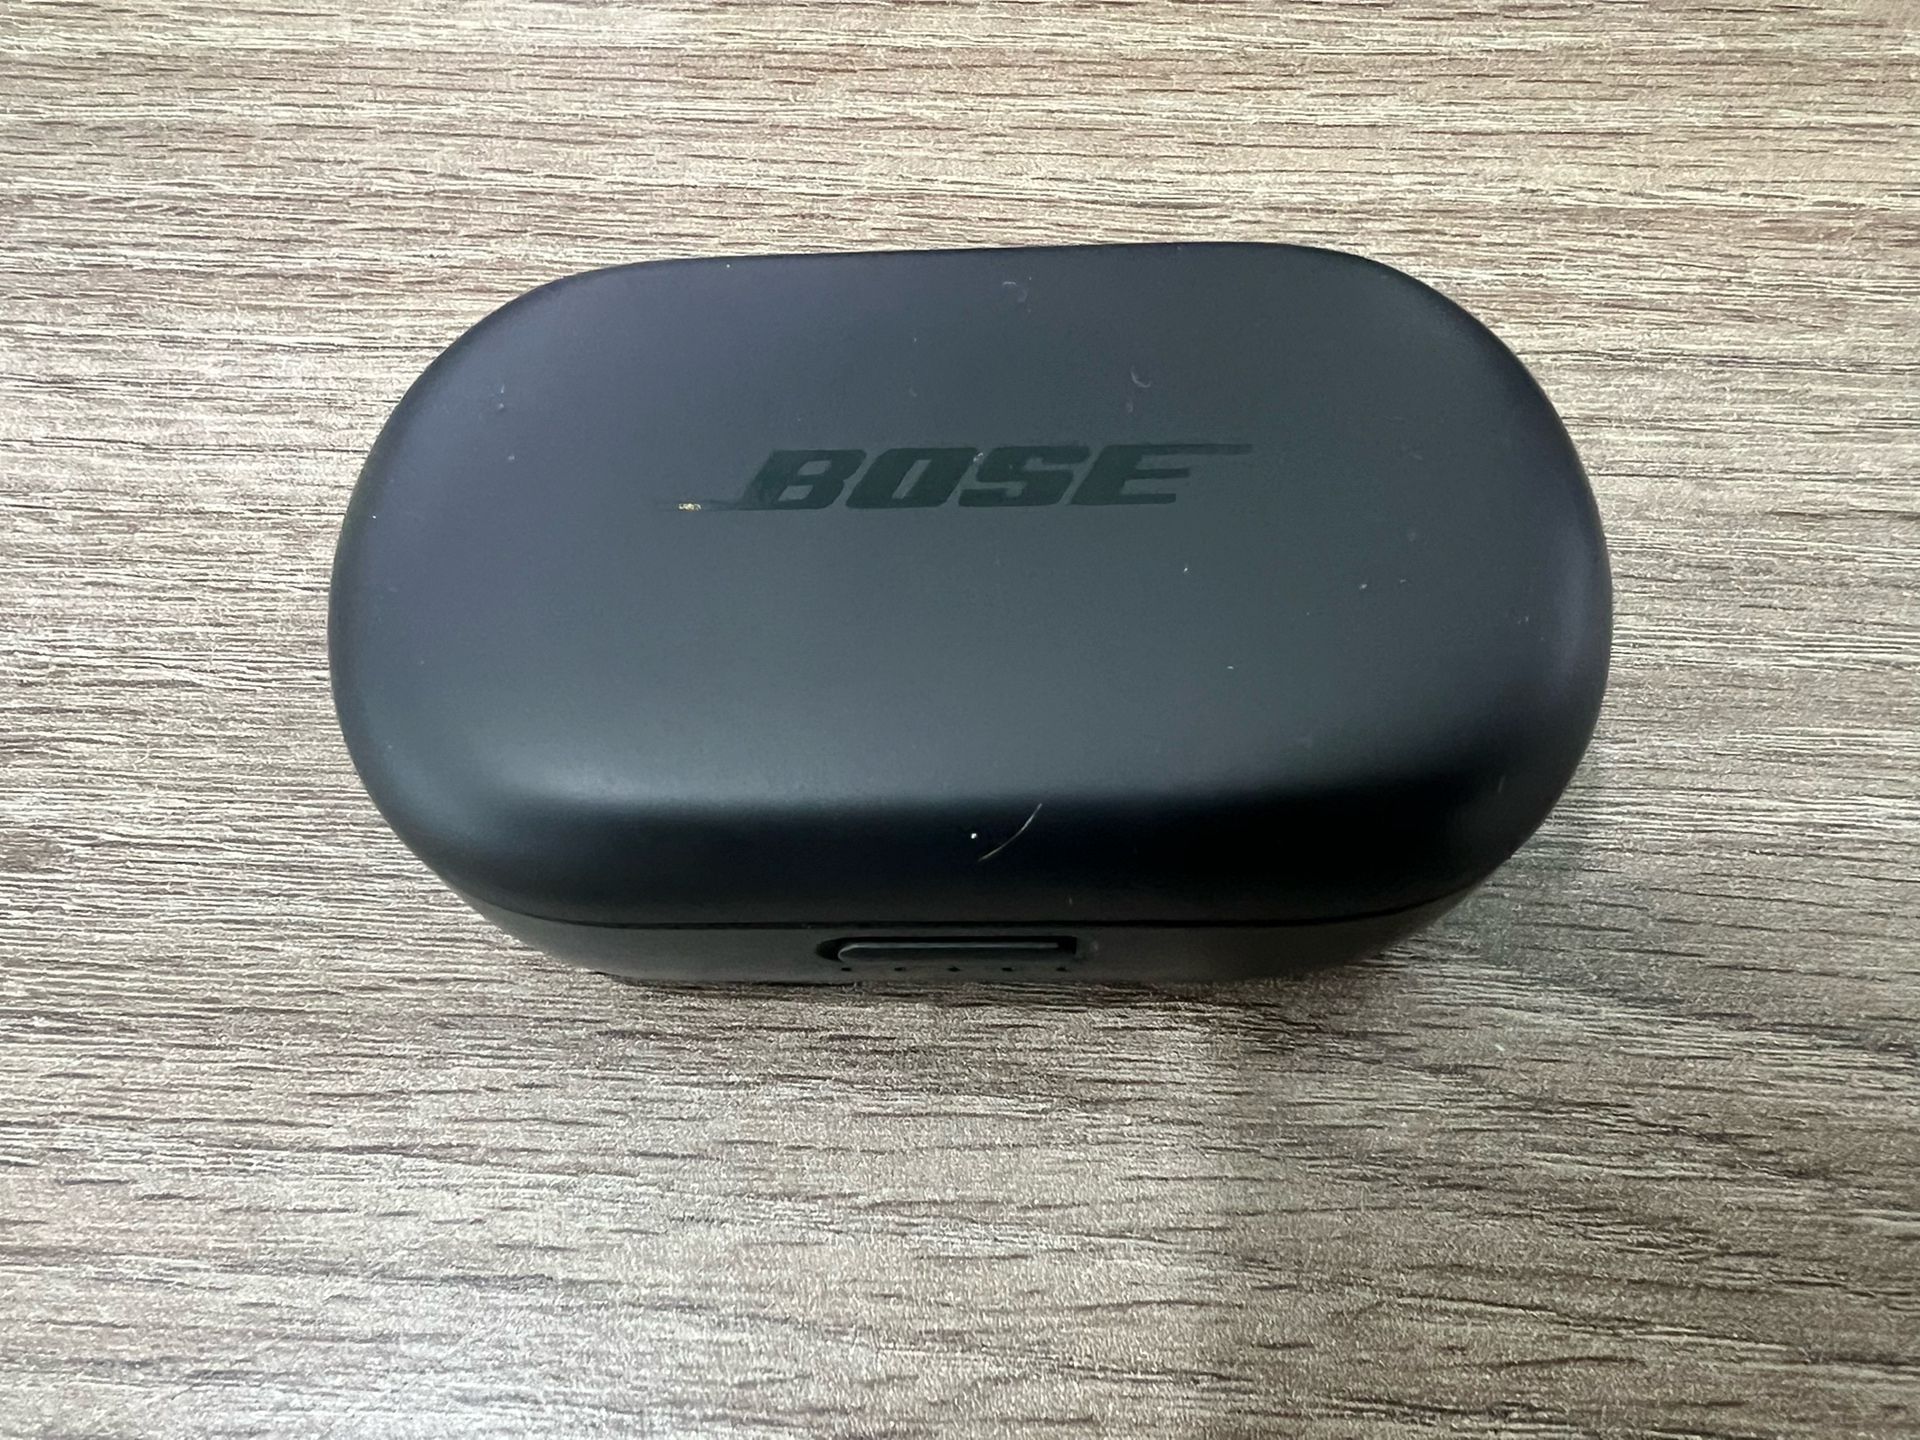 Bose QuietComfort Noise Cancelling Earbuds-Bluetooth Wireless Earphones, Triple Black